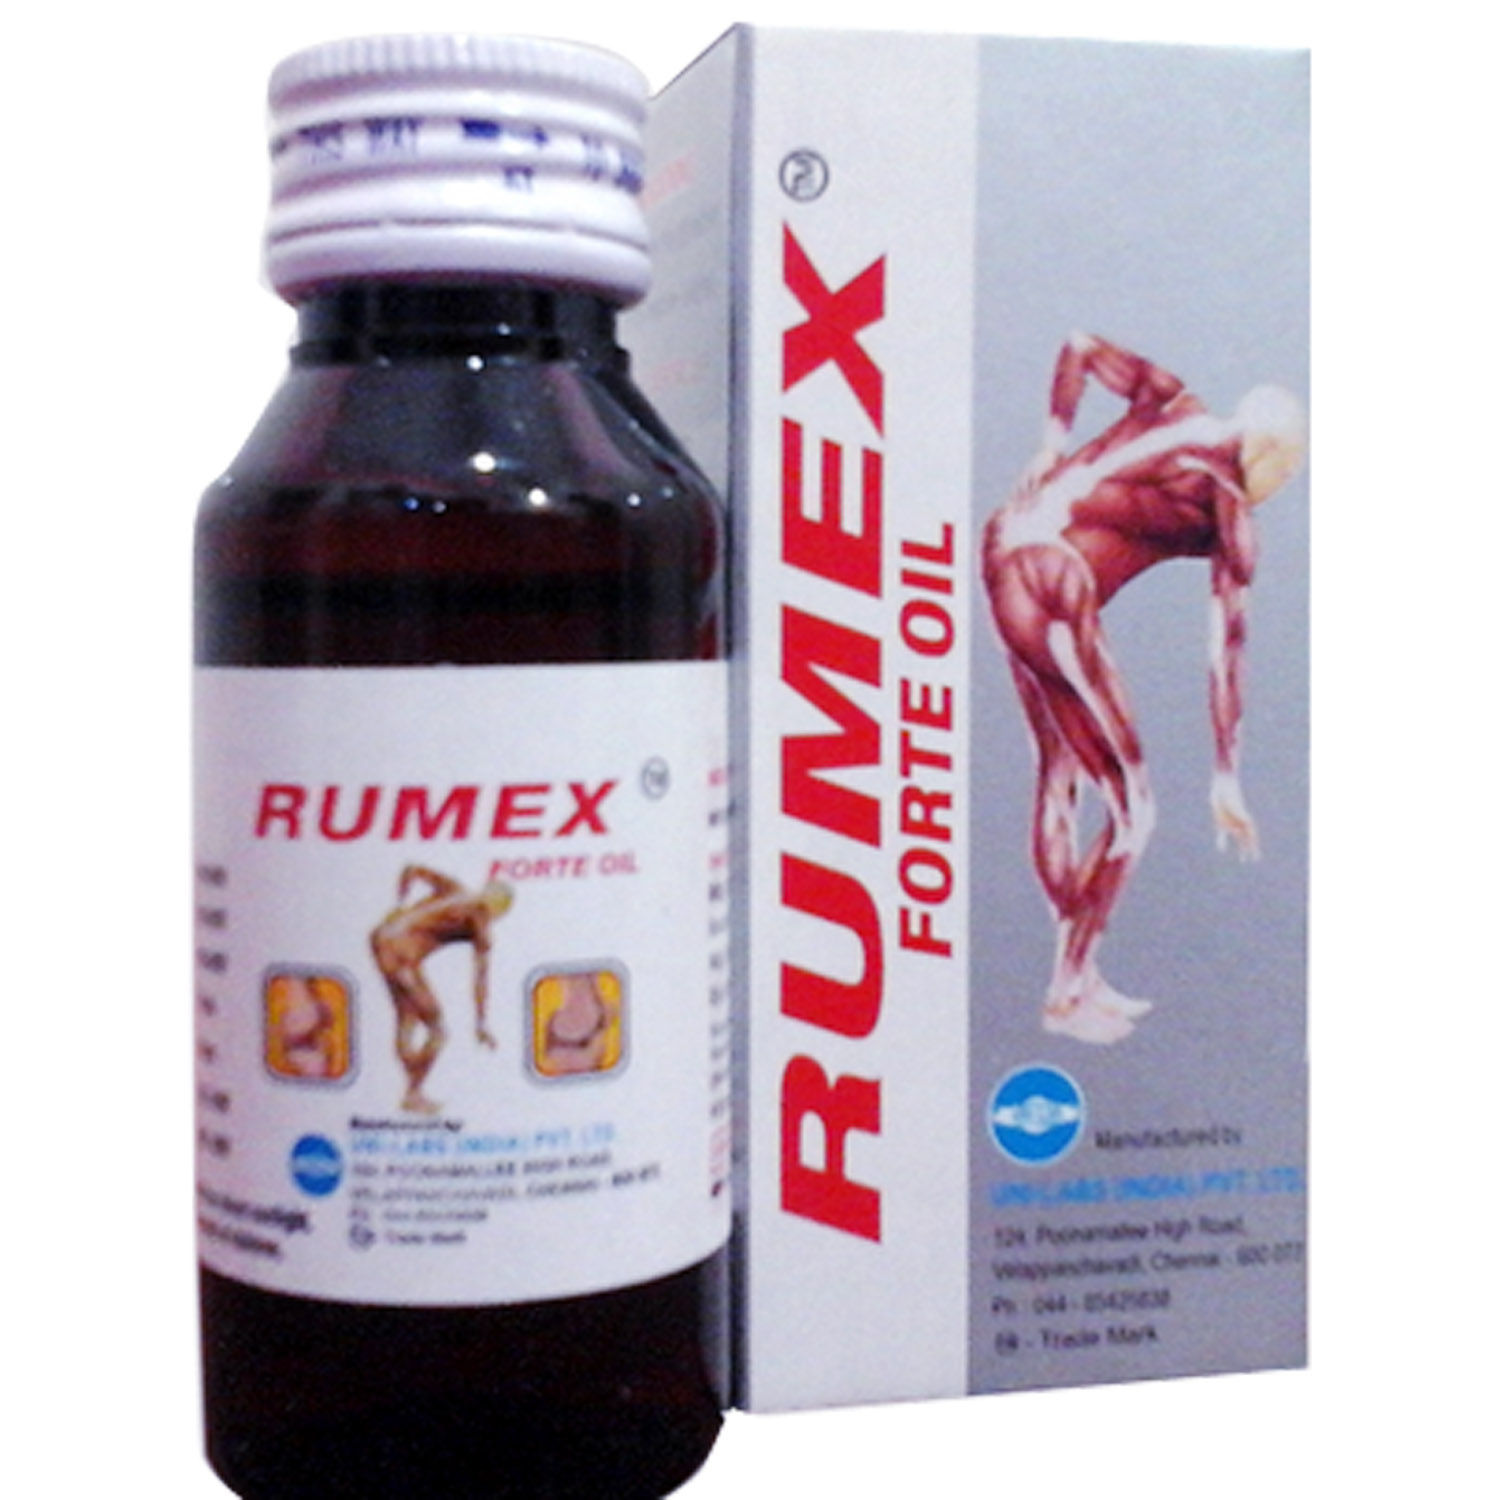 Buy Rumex Forte Oil, 50 ml Online